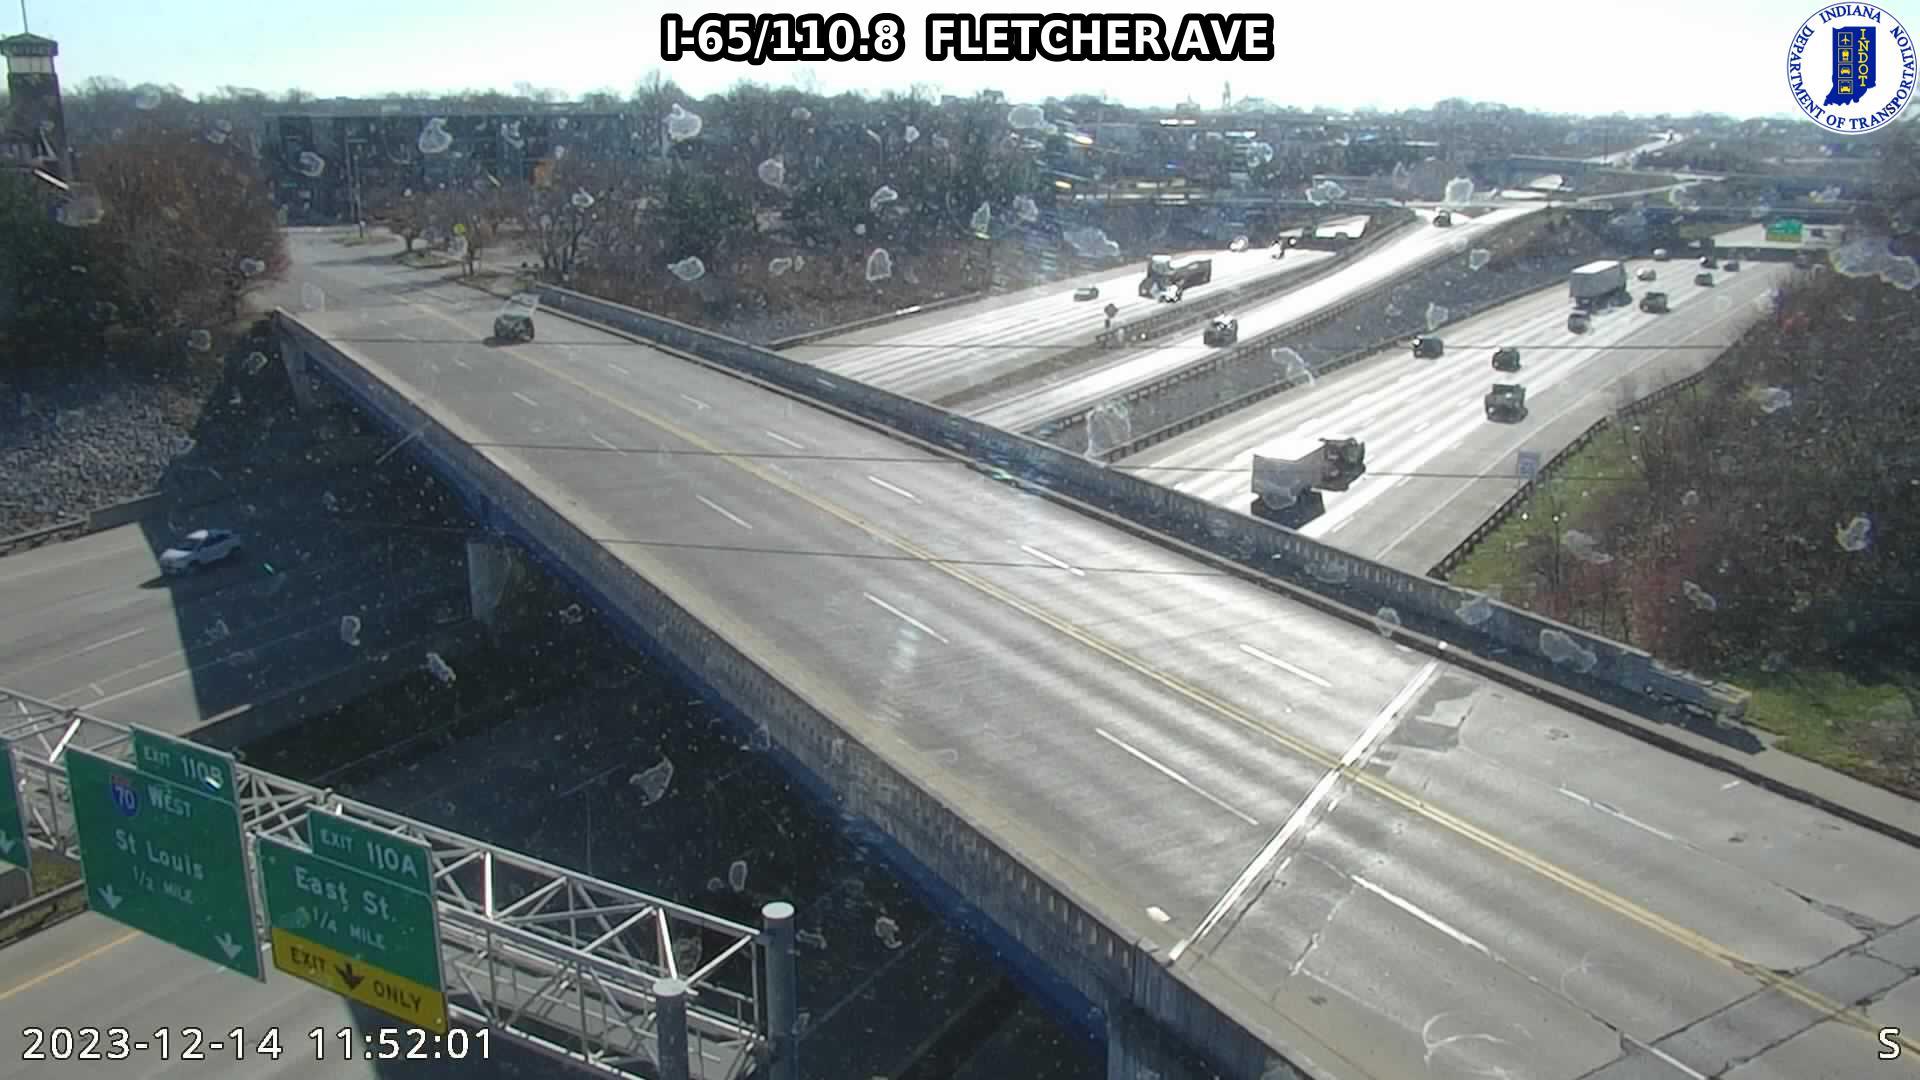 Traffic Cam Fletcher Place: I-65: I-65/110.8 FLETCHER AVE Player